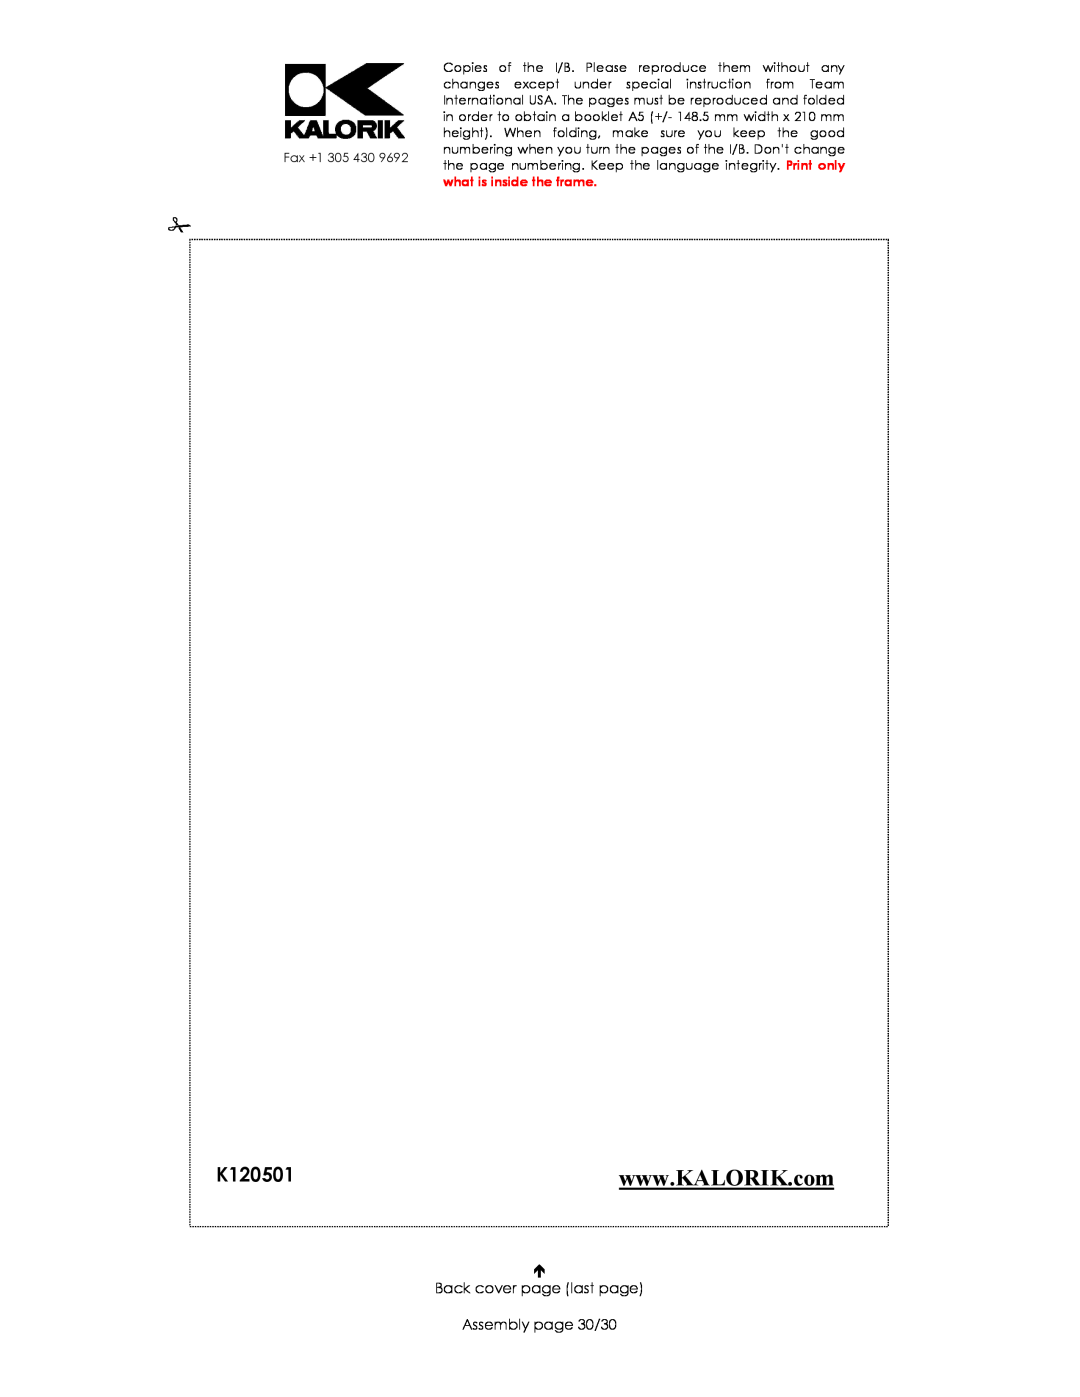 Kalorik EK35321 manual Back cover page last page Assembly page 30/30, Fax +1 305 430 